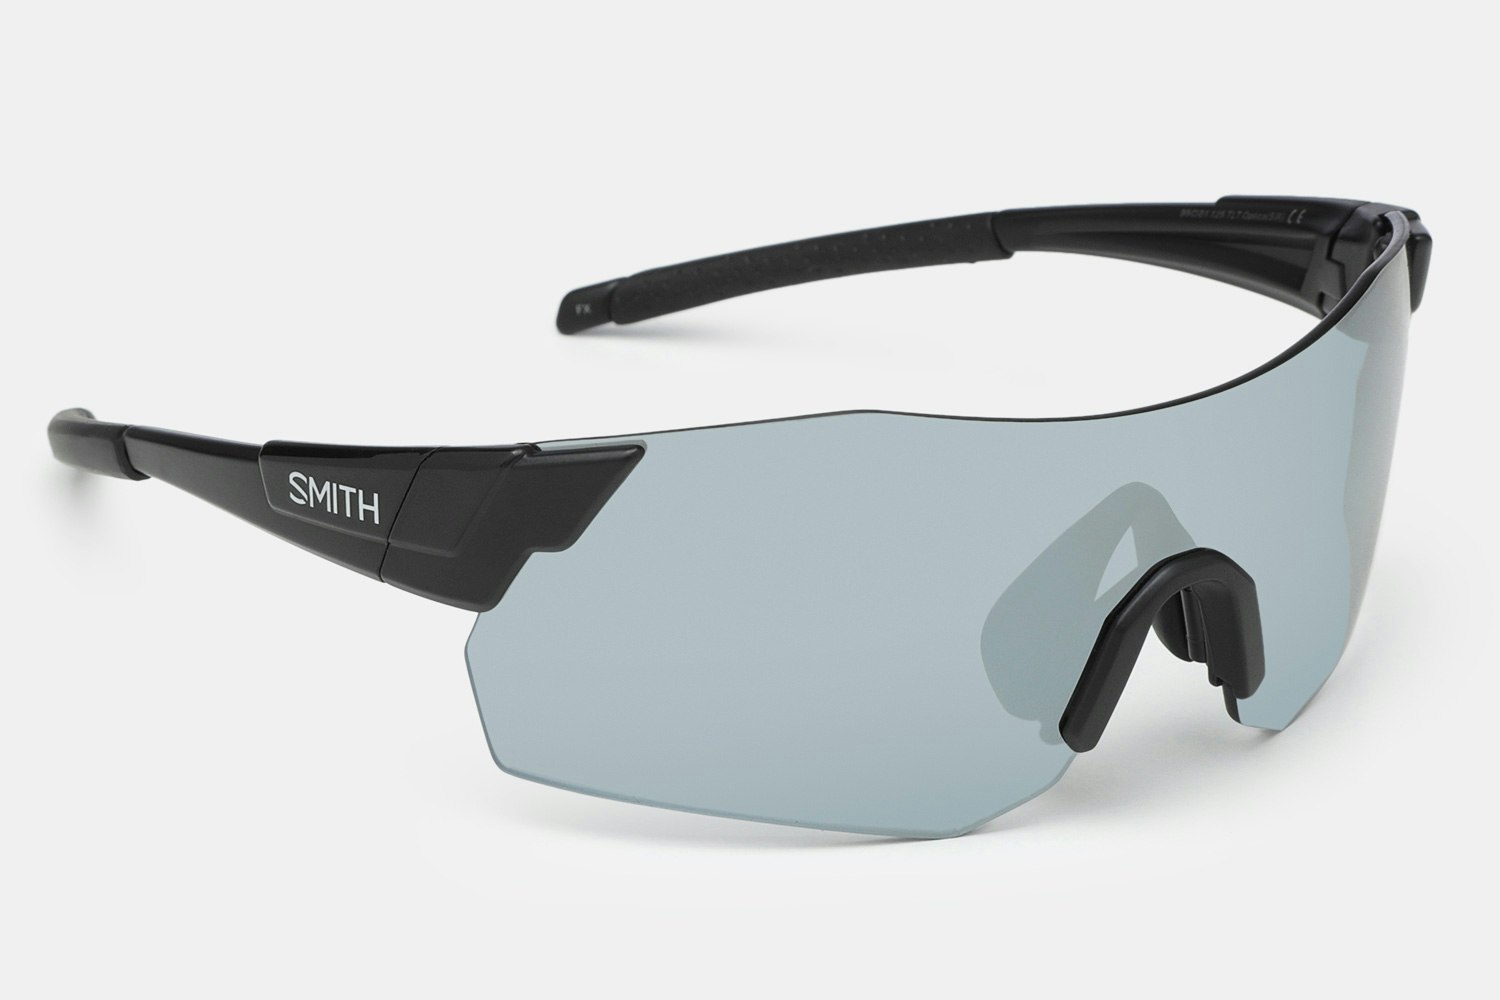 Smith Optics Pivlock Arena Sunglasses Details | Eyewear 